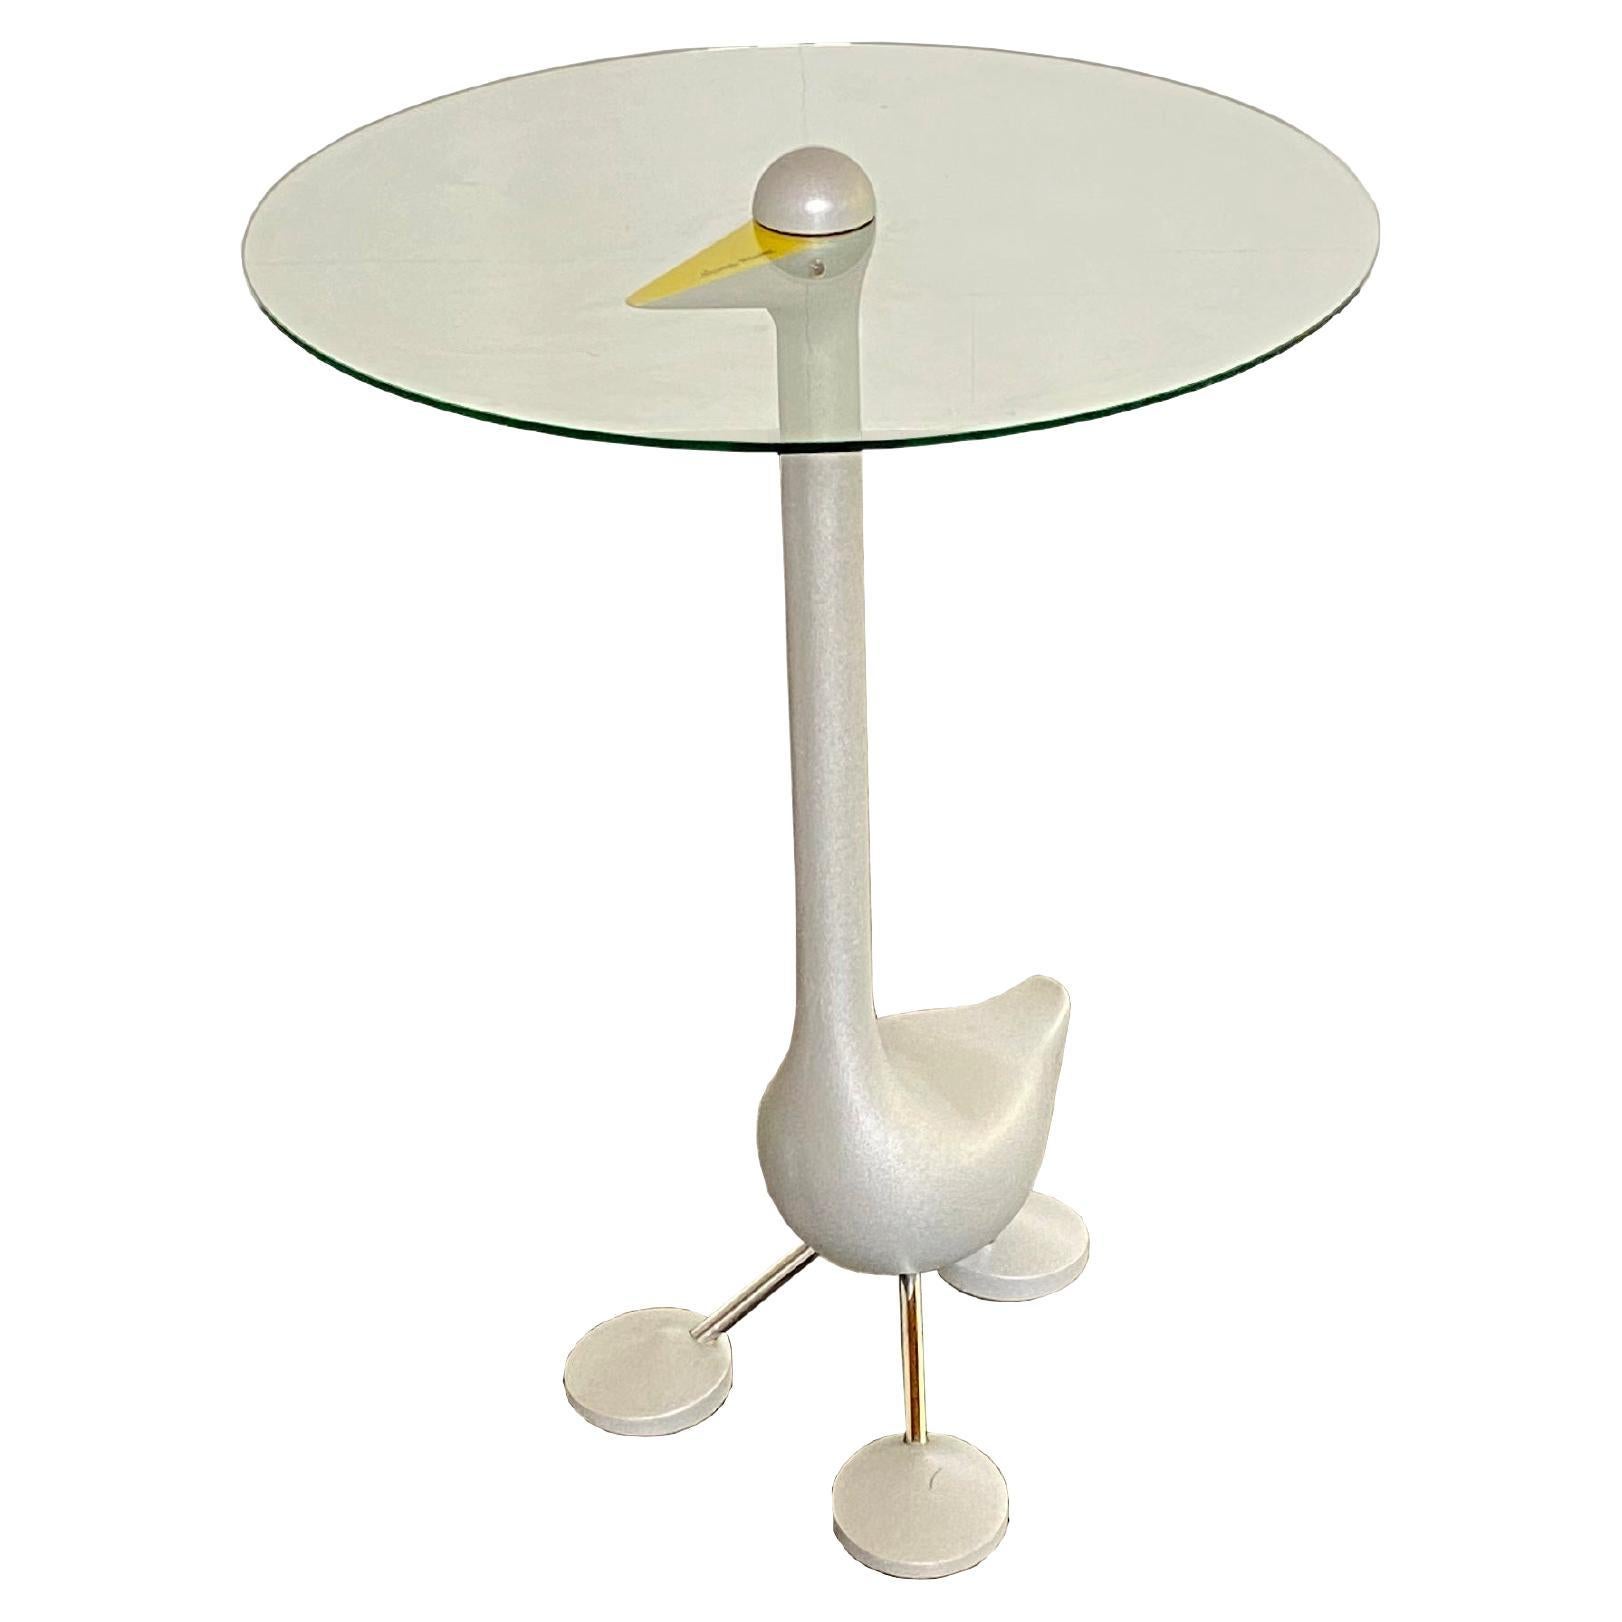 Zanotta Editioni Collection Sirfo Table designed by Alessandro Mendini 1986